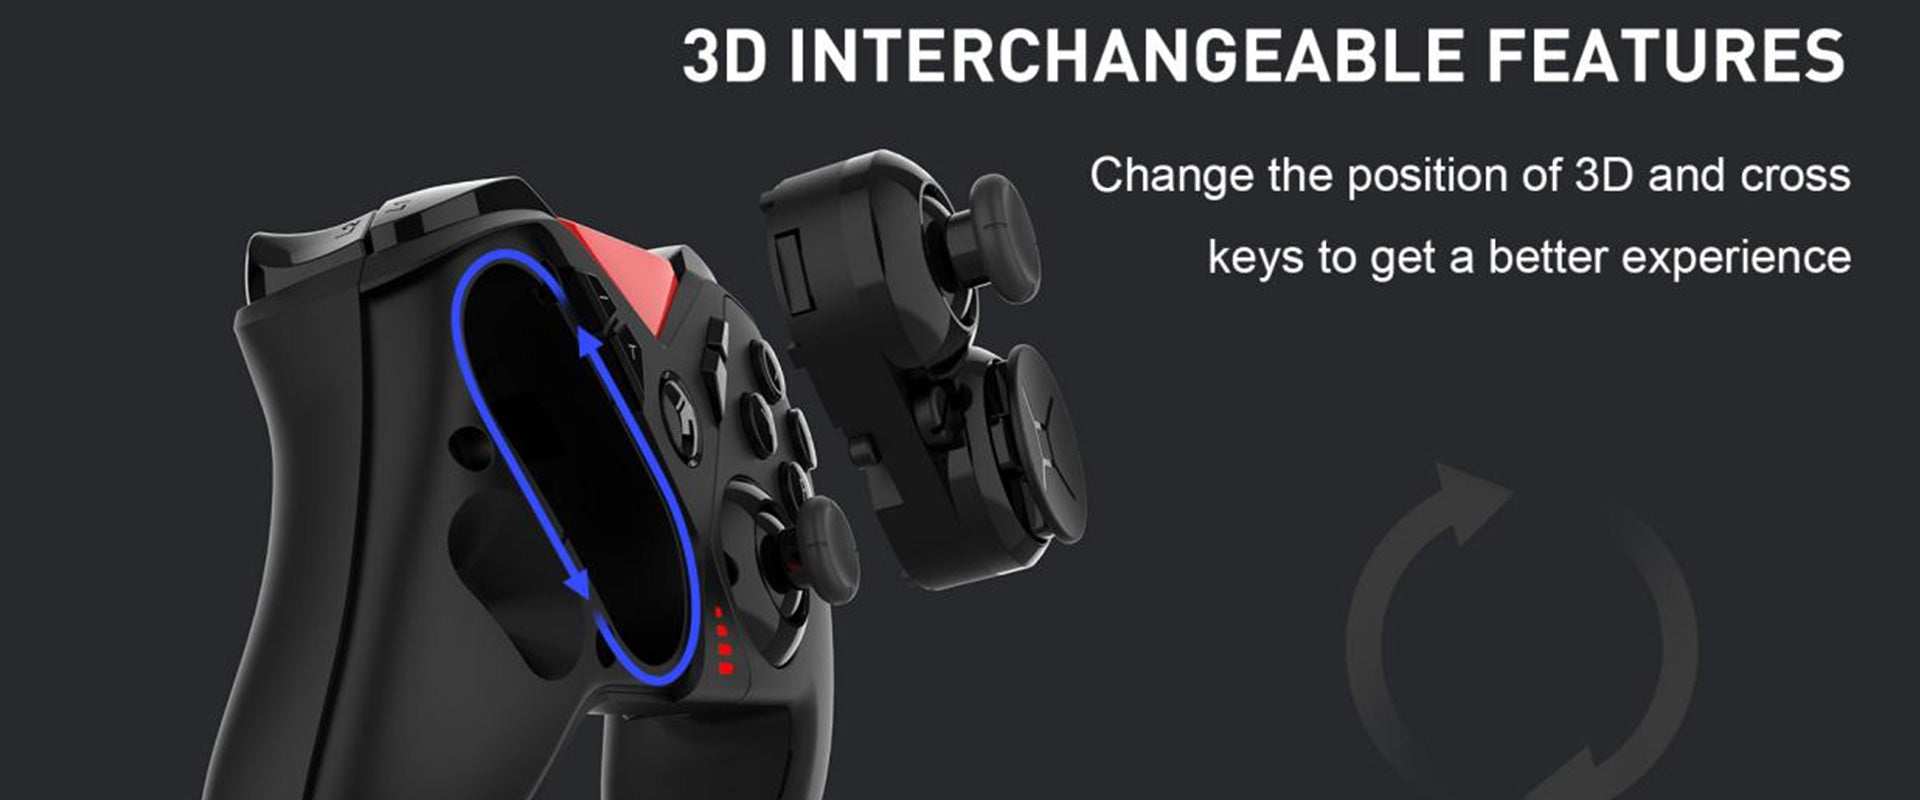 3D-interchangeable-features